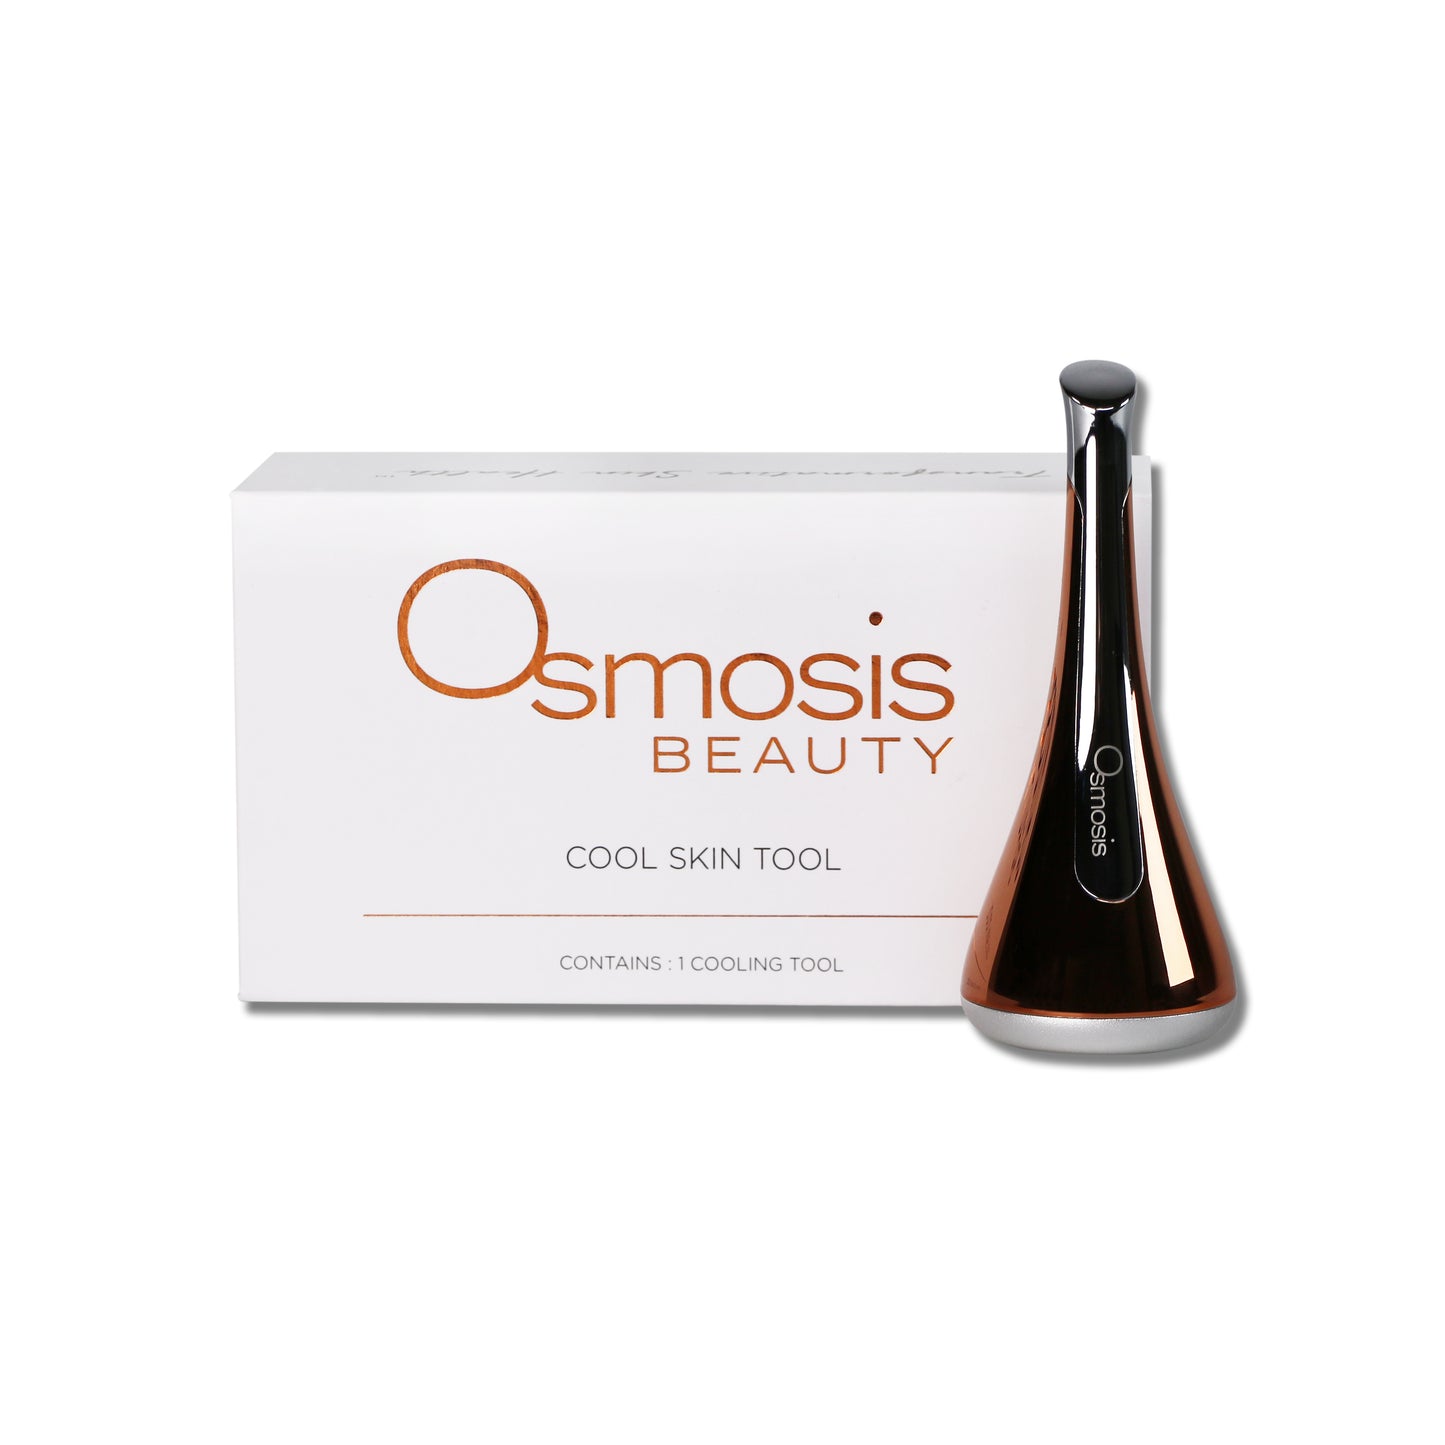 Osmosis Cool tool